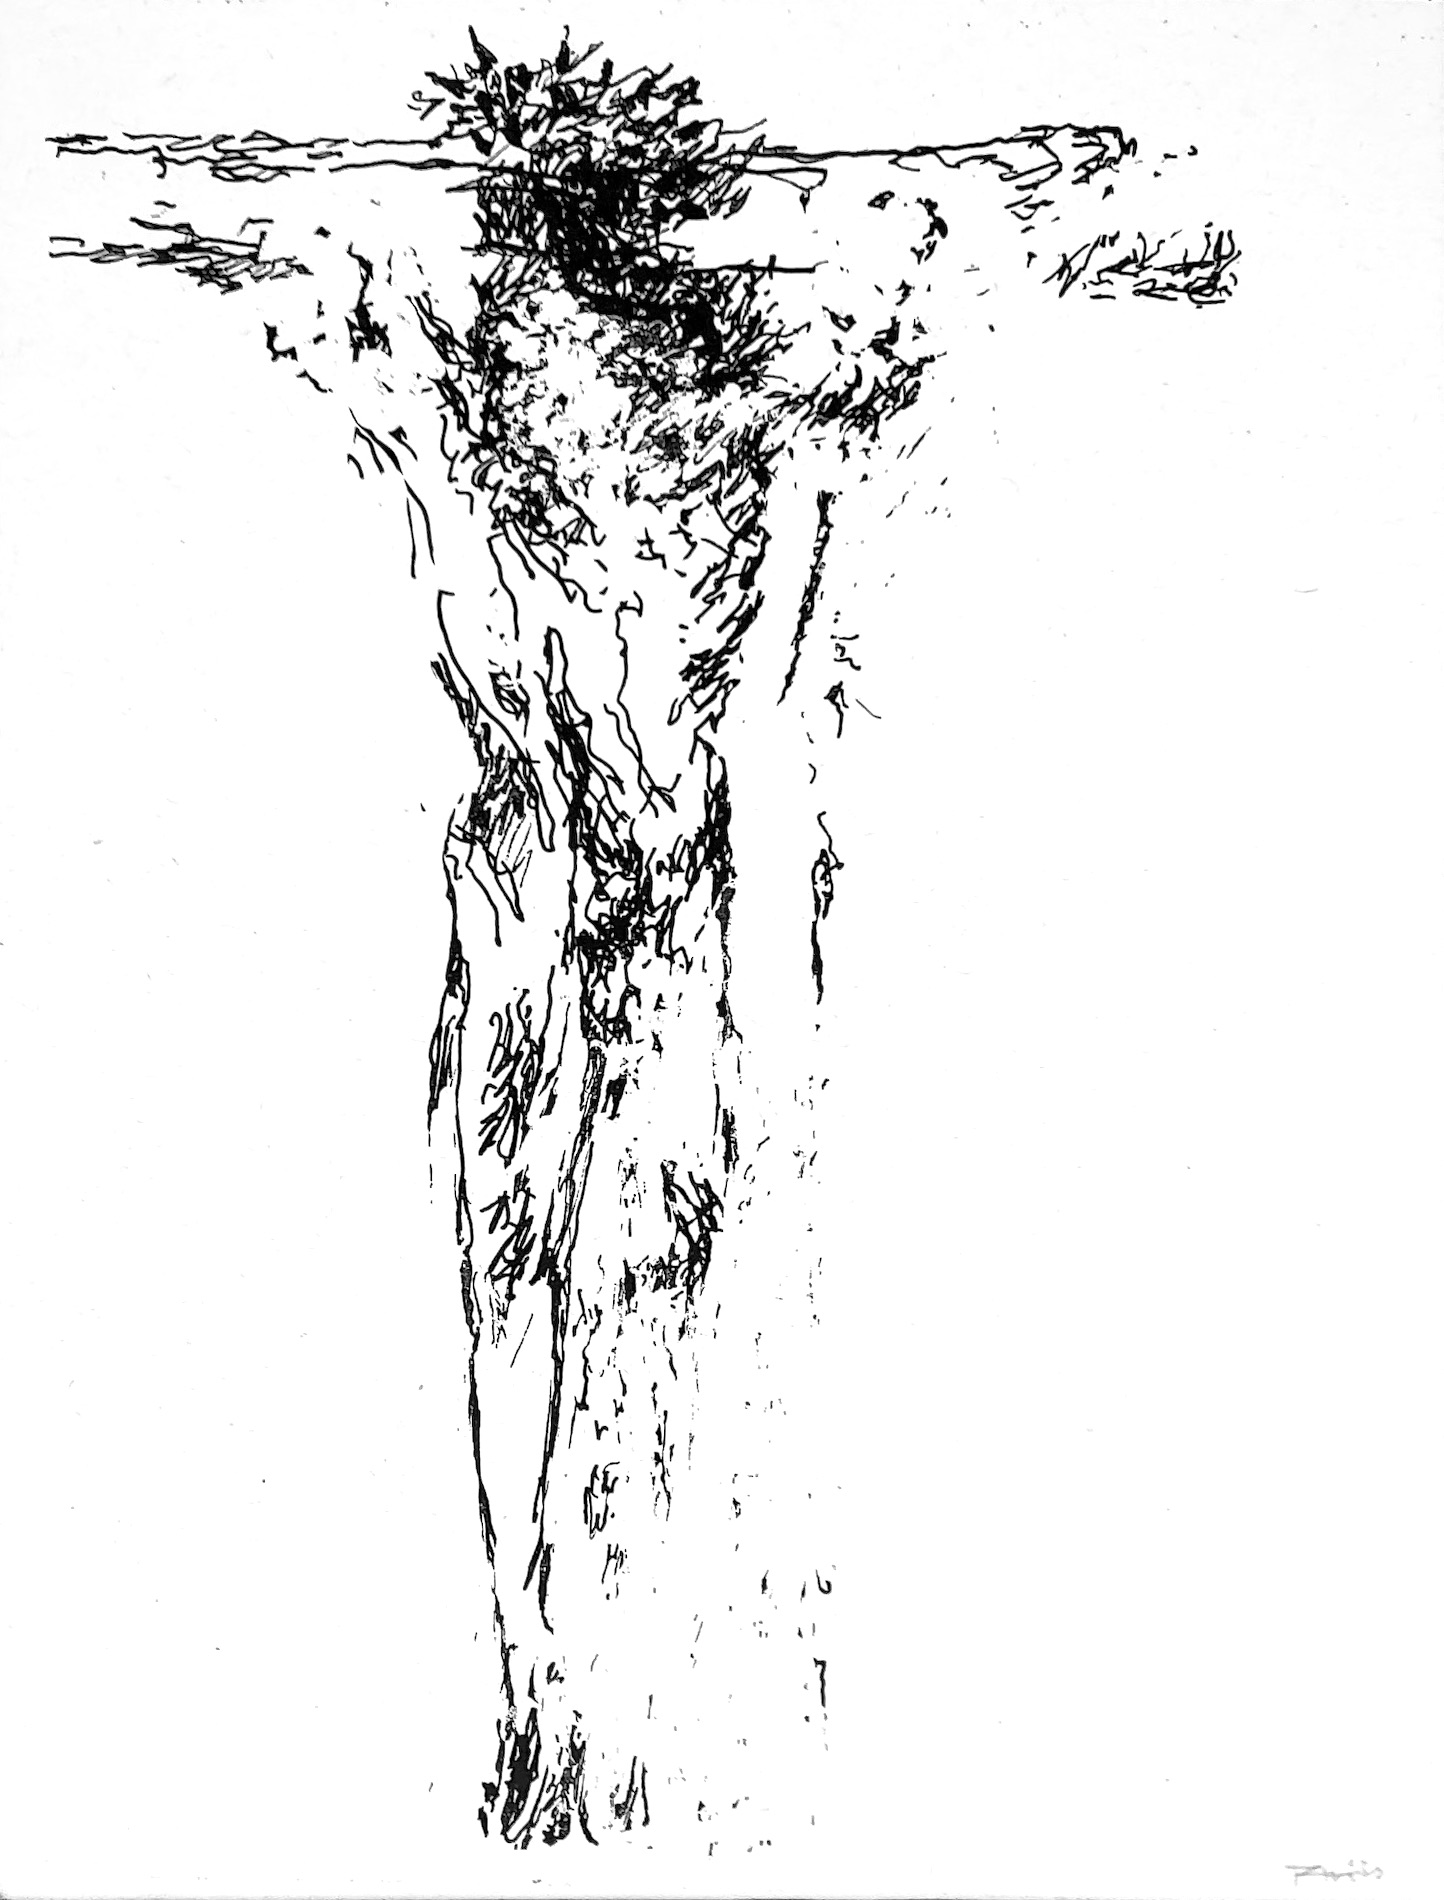 Saeta4 - The crucifixion of Jesus